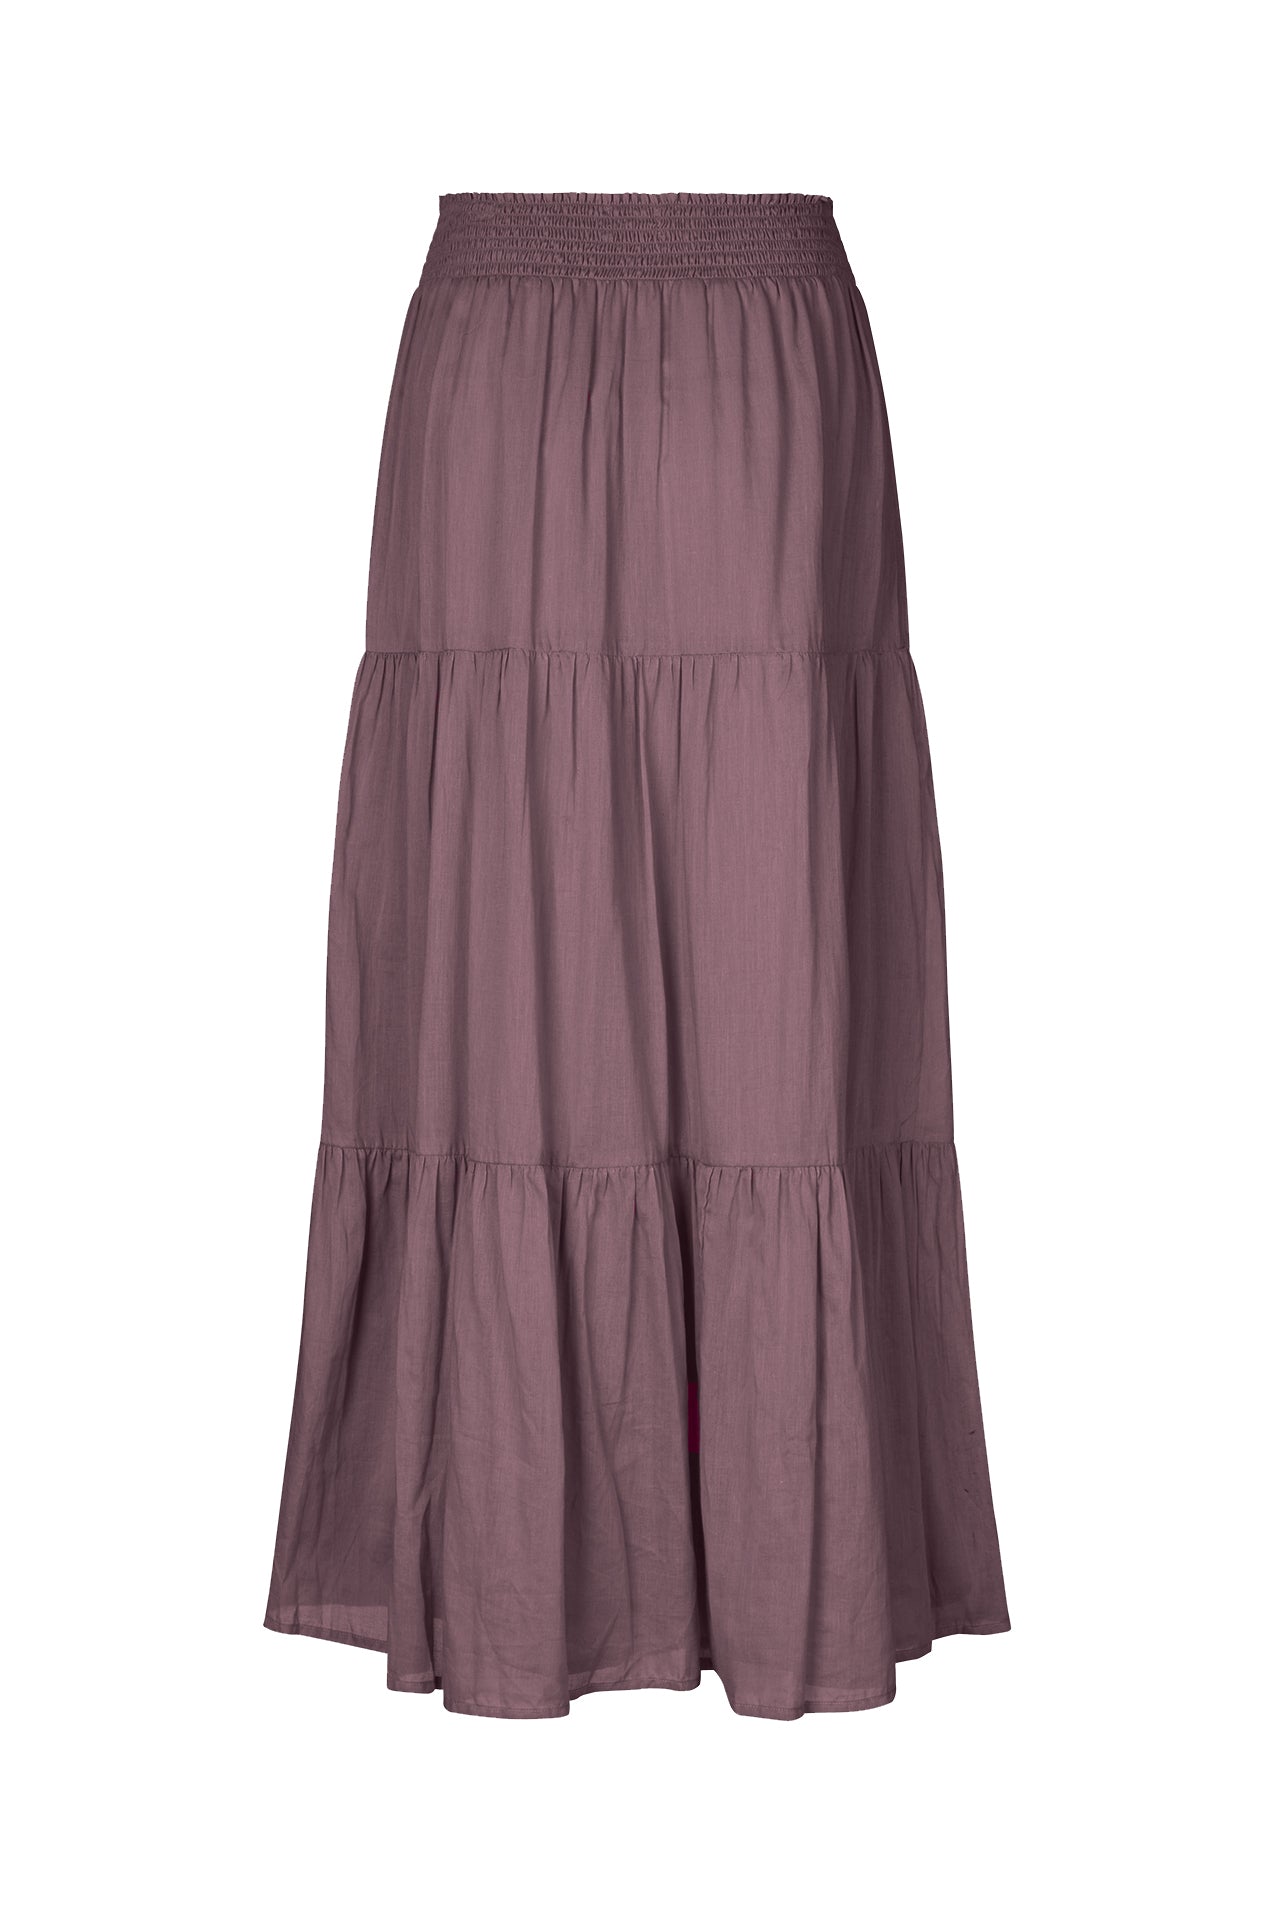 Lollys Laundry DiamondLL Maxi Skirt Skirt 34 Mauve